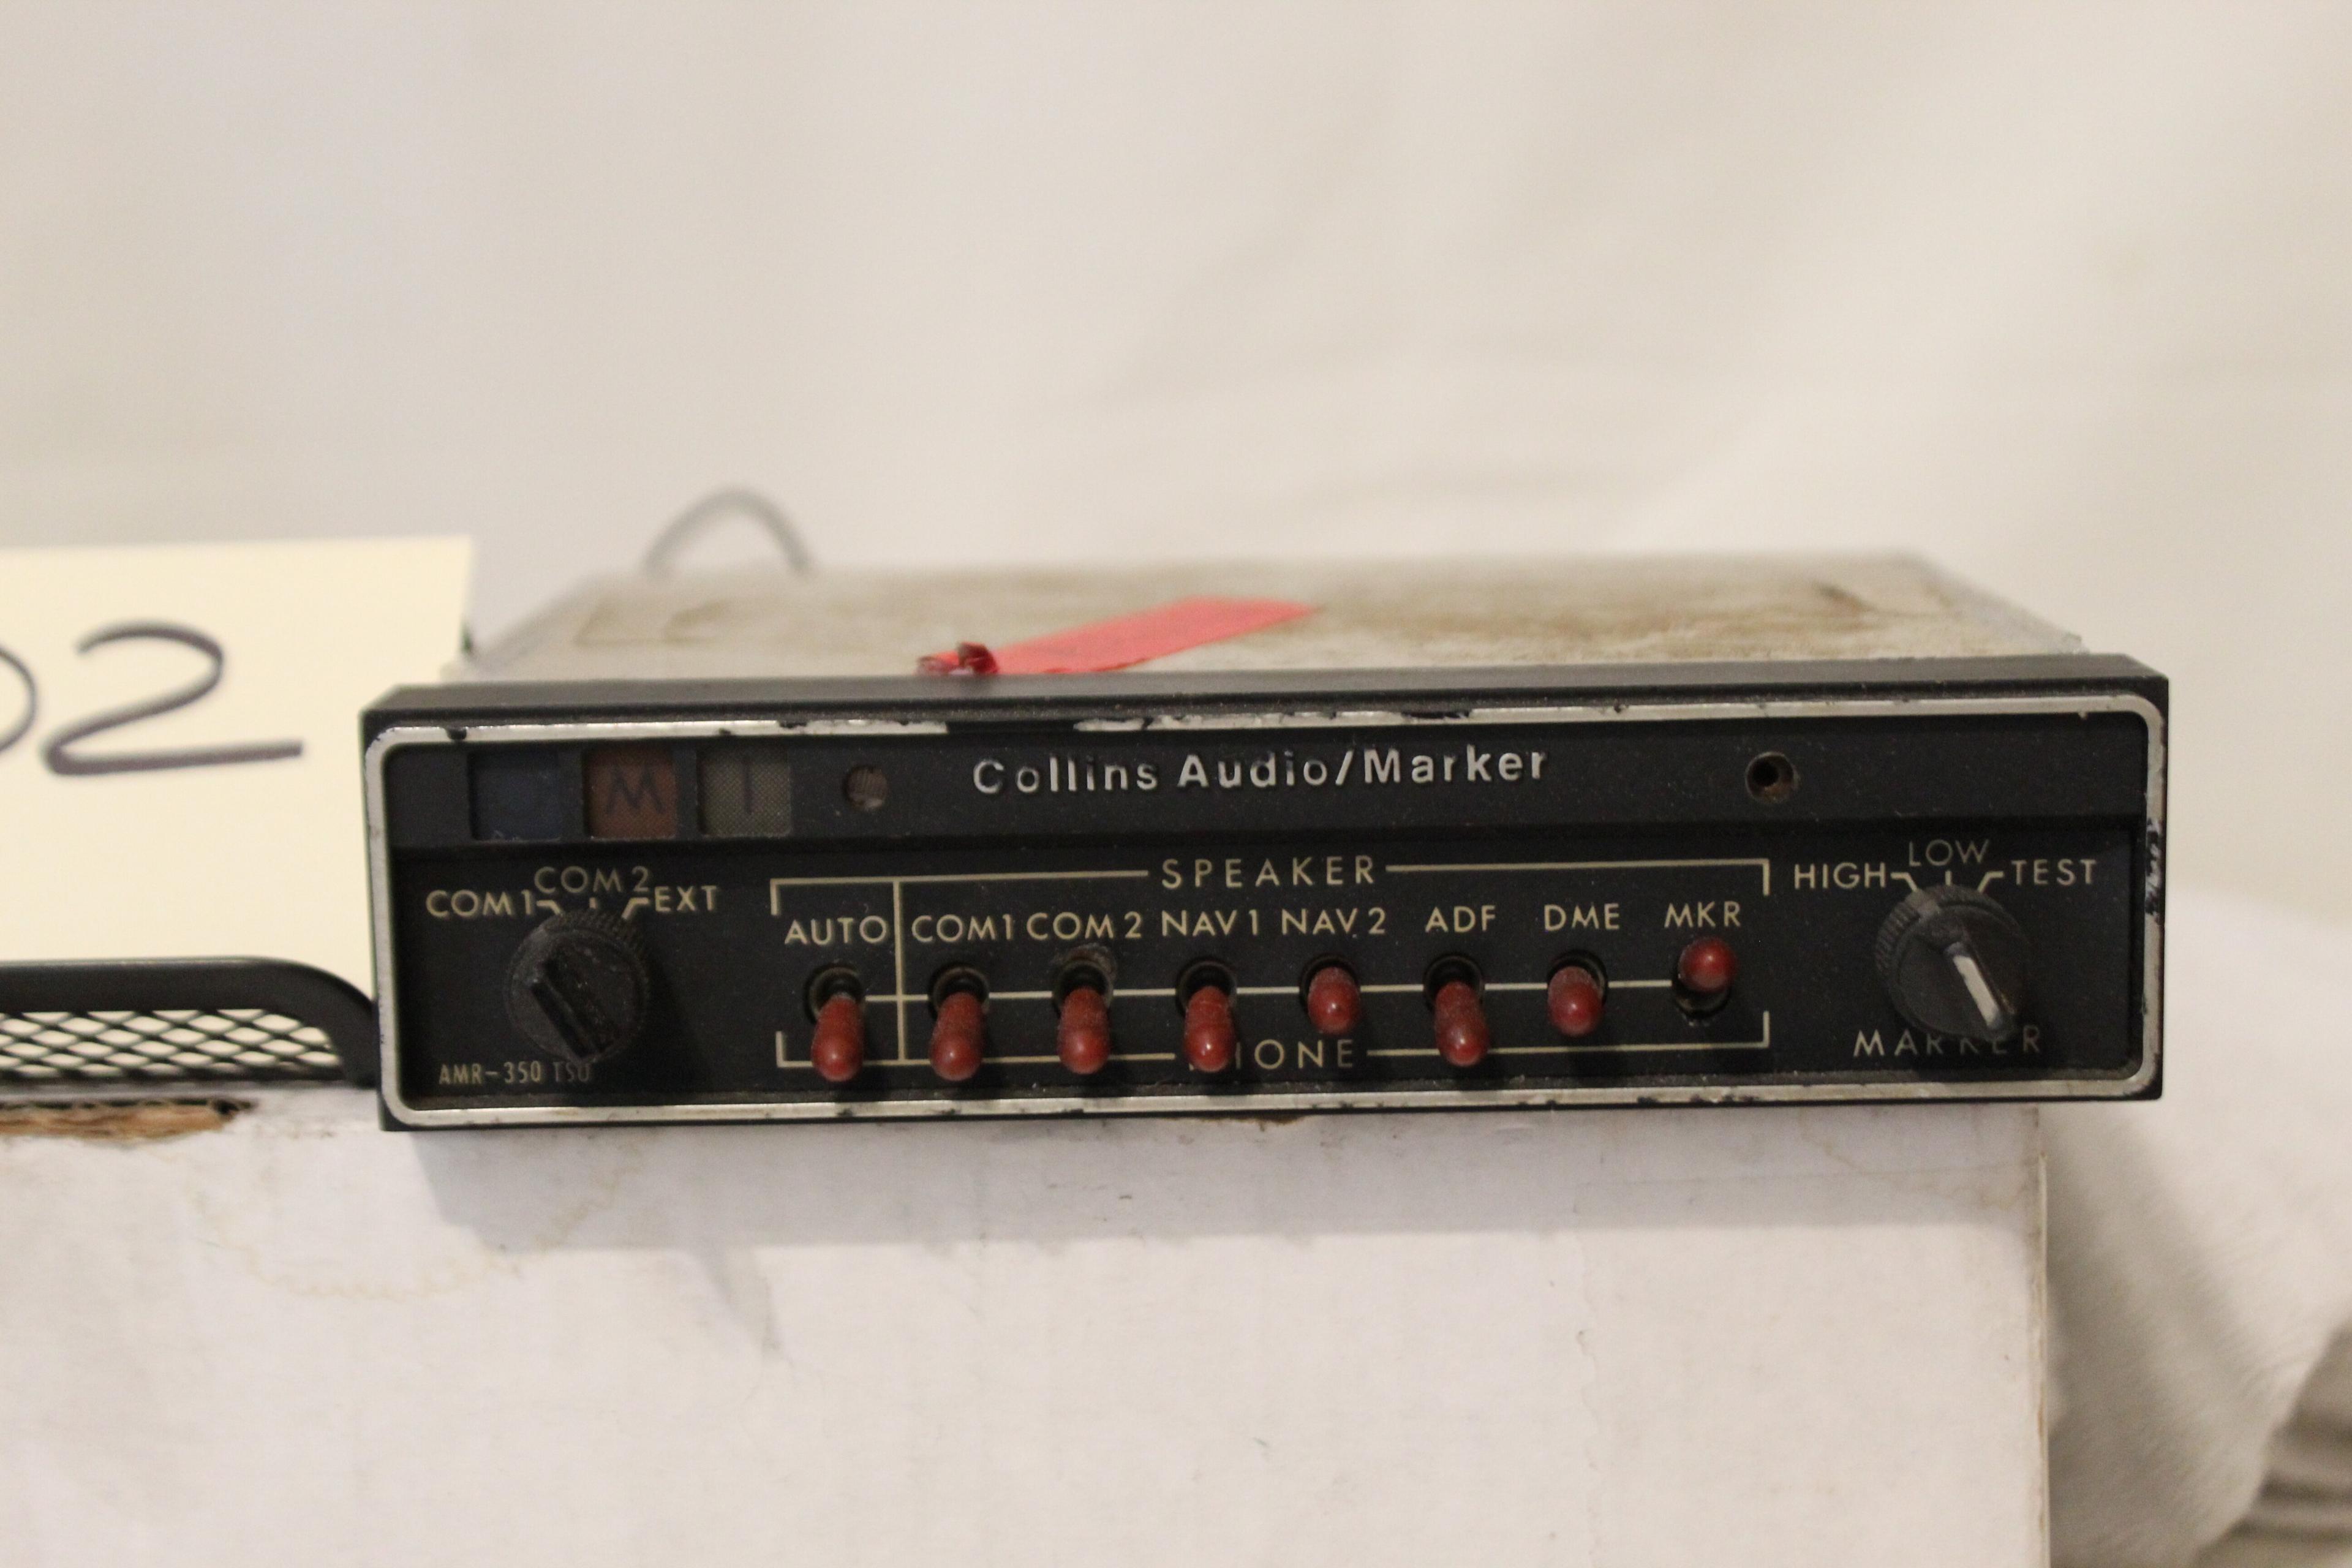 Collins Audio/marker Amr-350